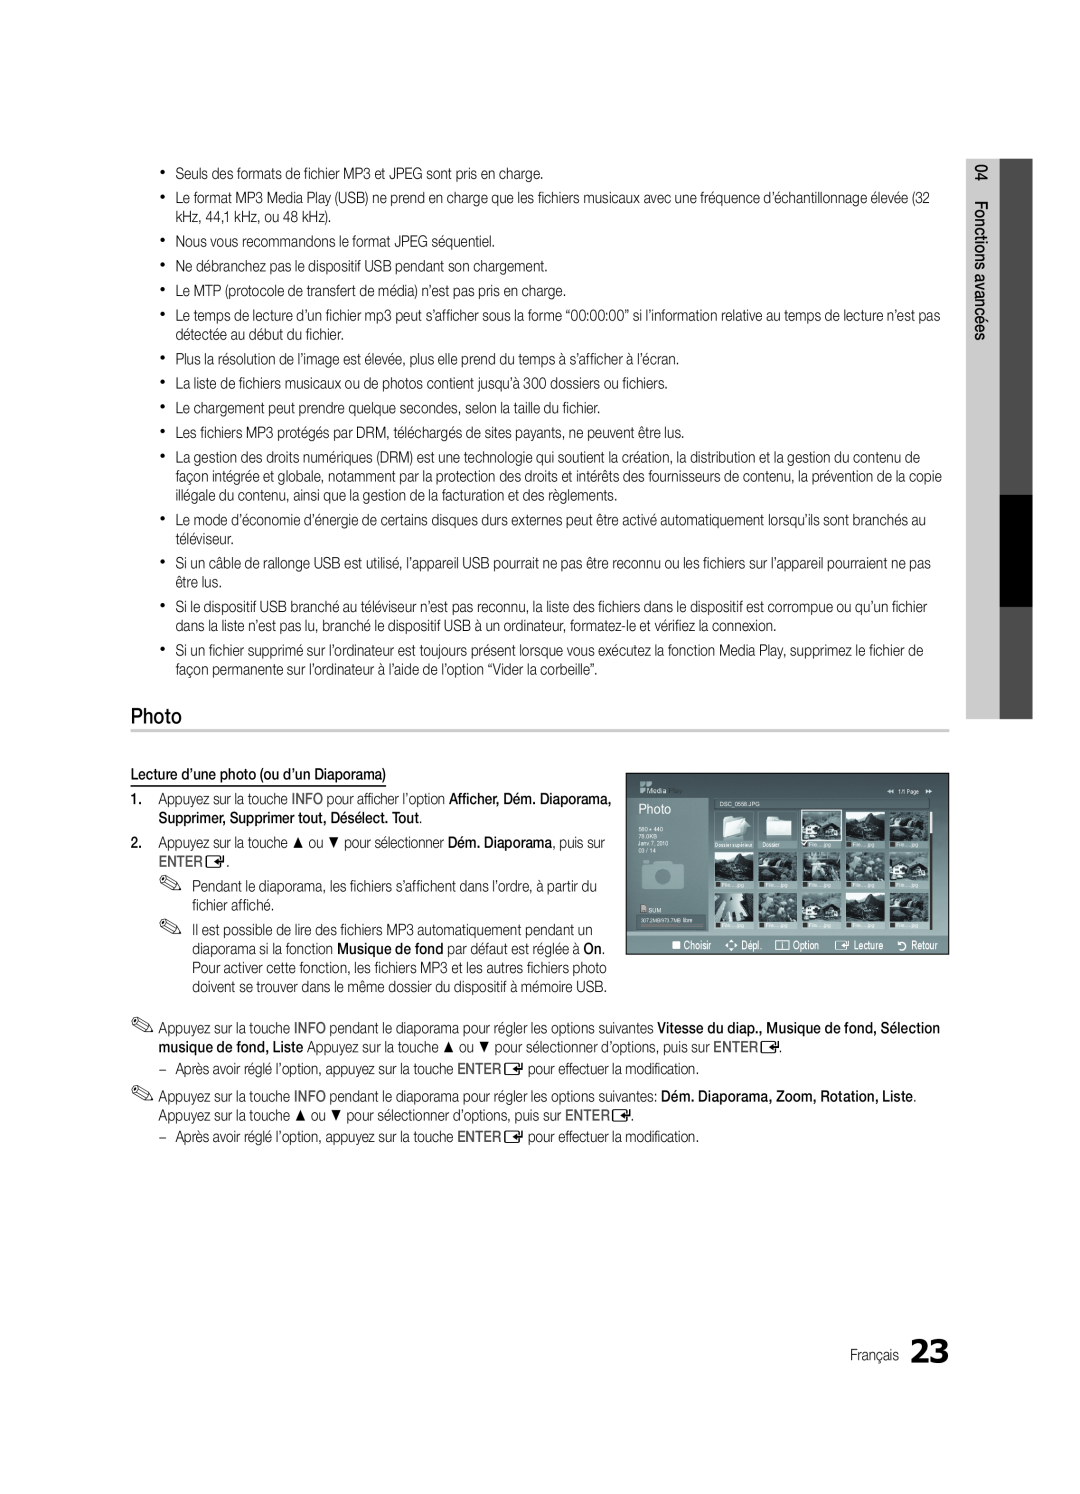 Samsung PC430-ZC, BN68-02576B-06 user manual Photo, Entere, Fonctions avancées 